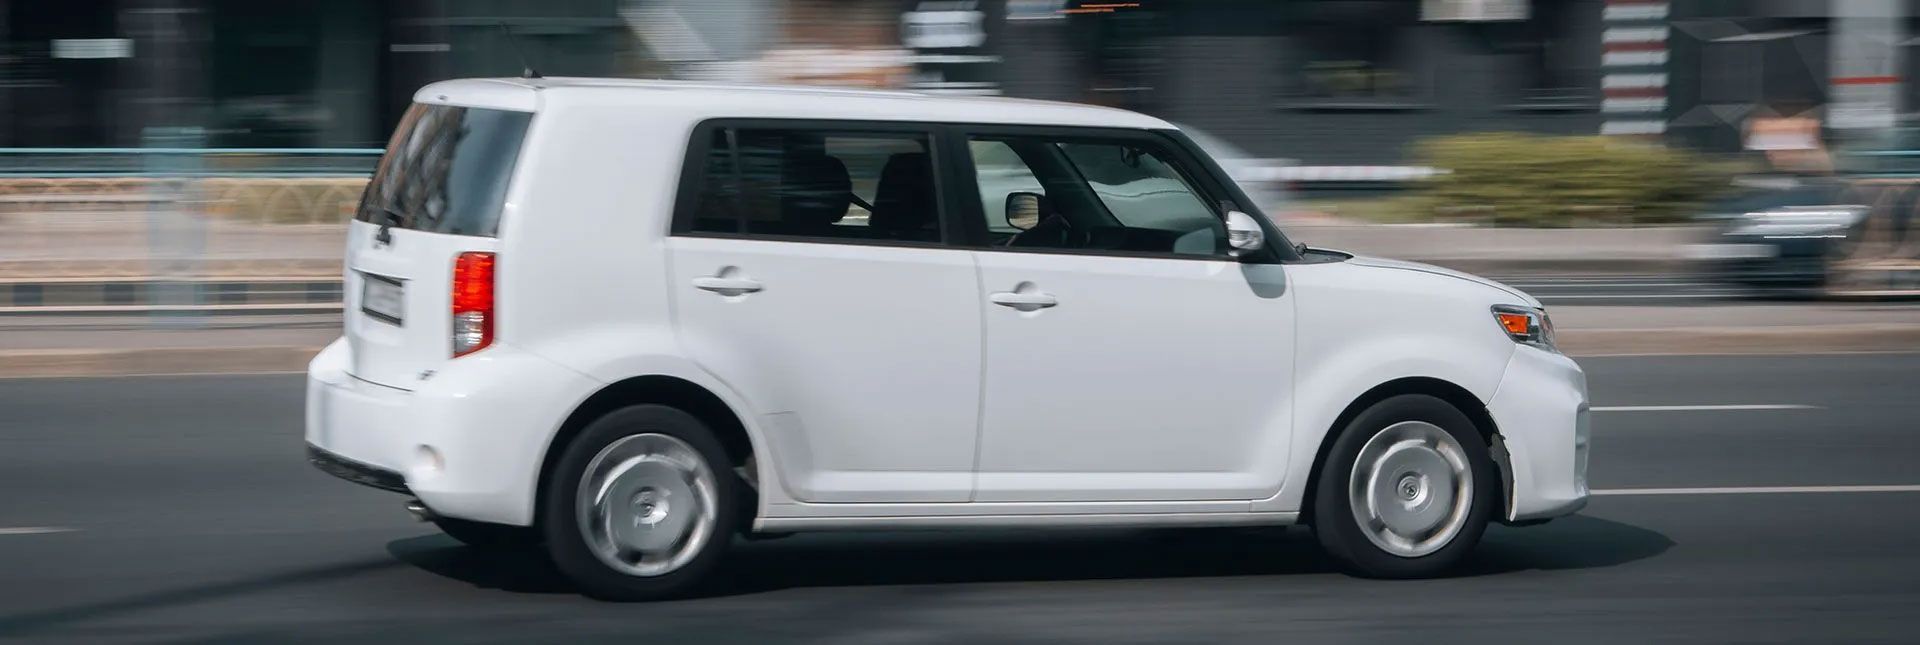 white car on a road | Berkeley Minicar